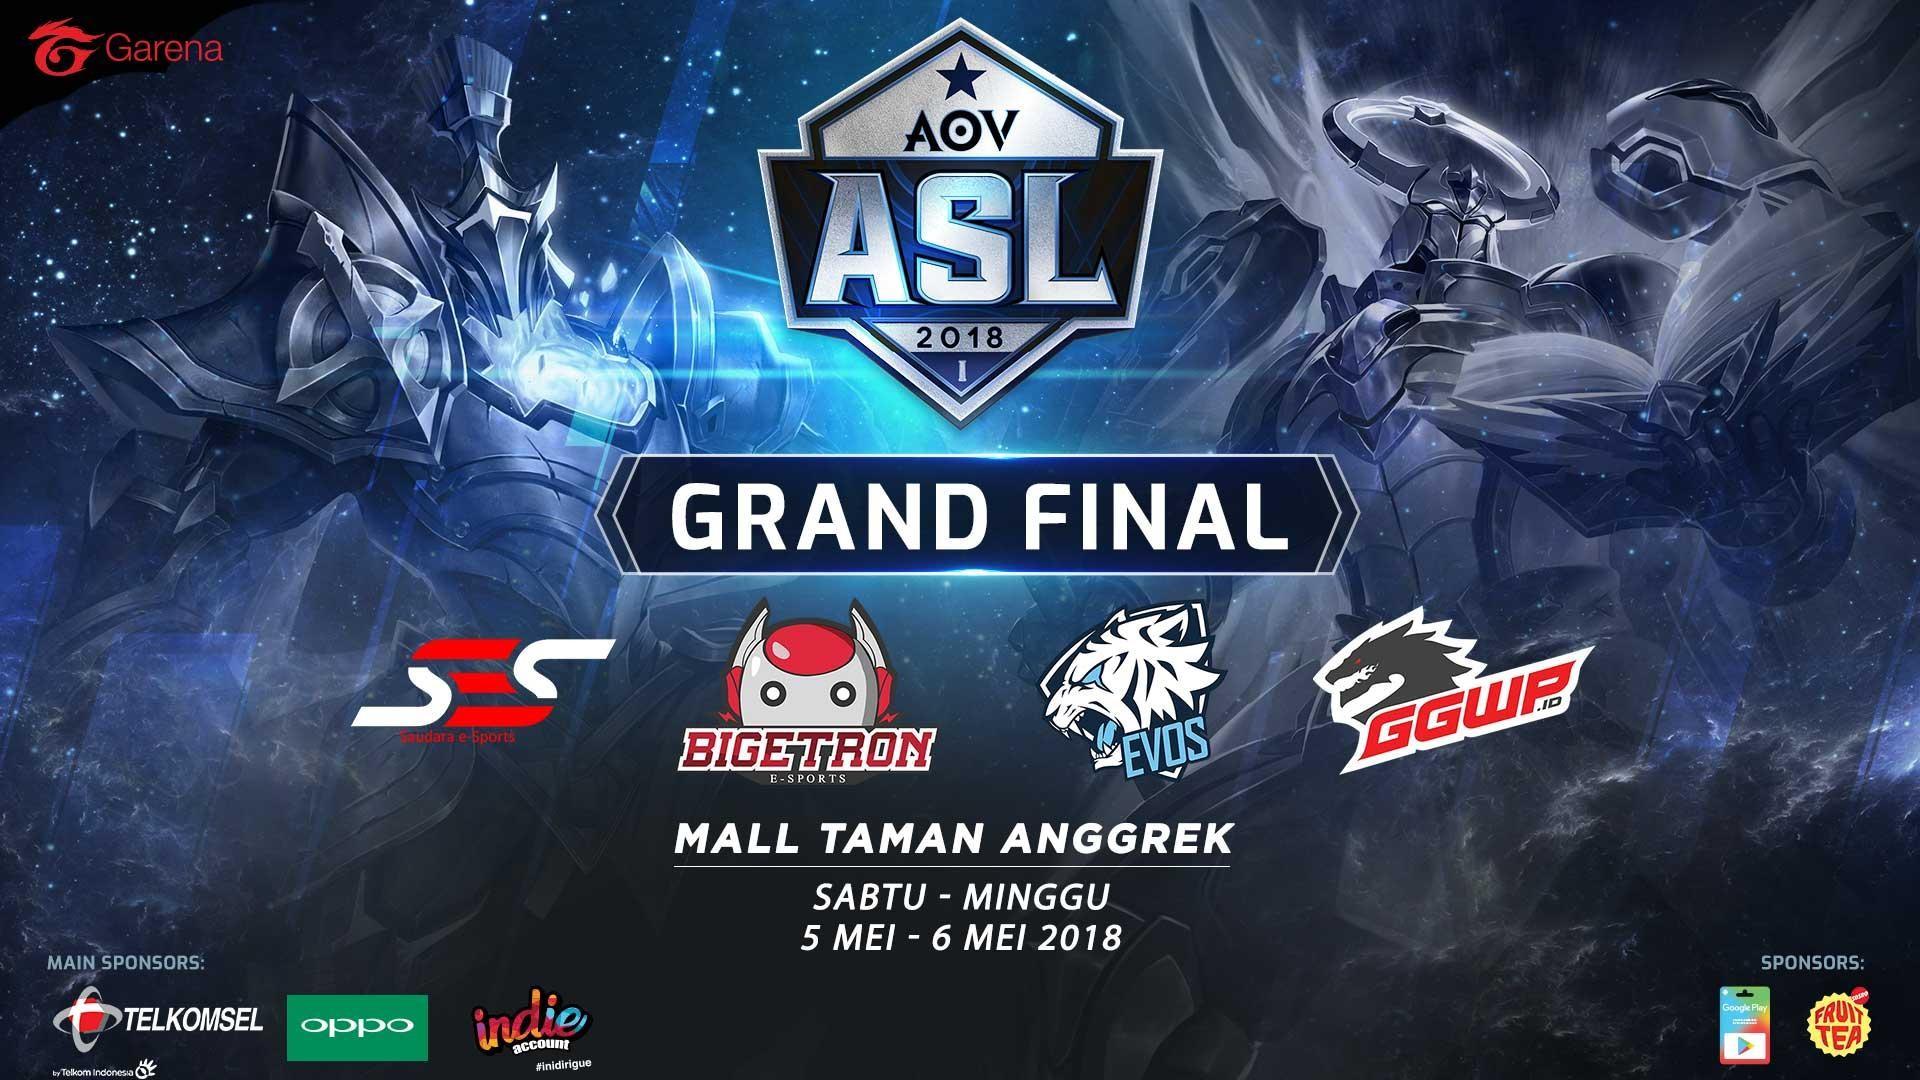 AOV Star League 2018 Season 1 Telah Memasuki Babak Grand Final Dengan Menyisakan 4 Tim